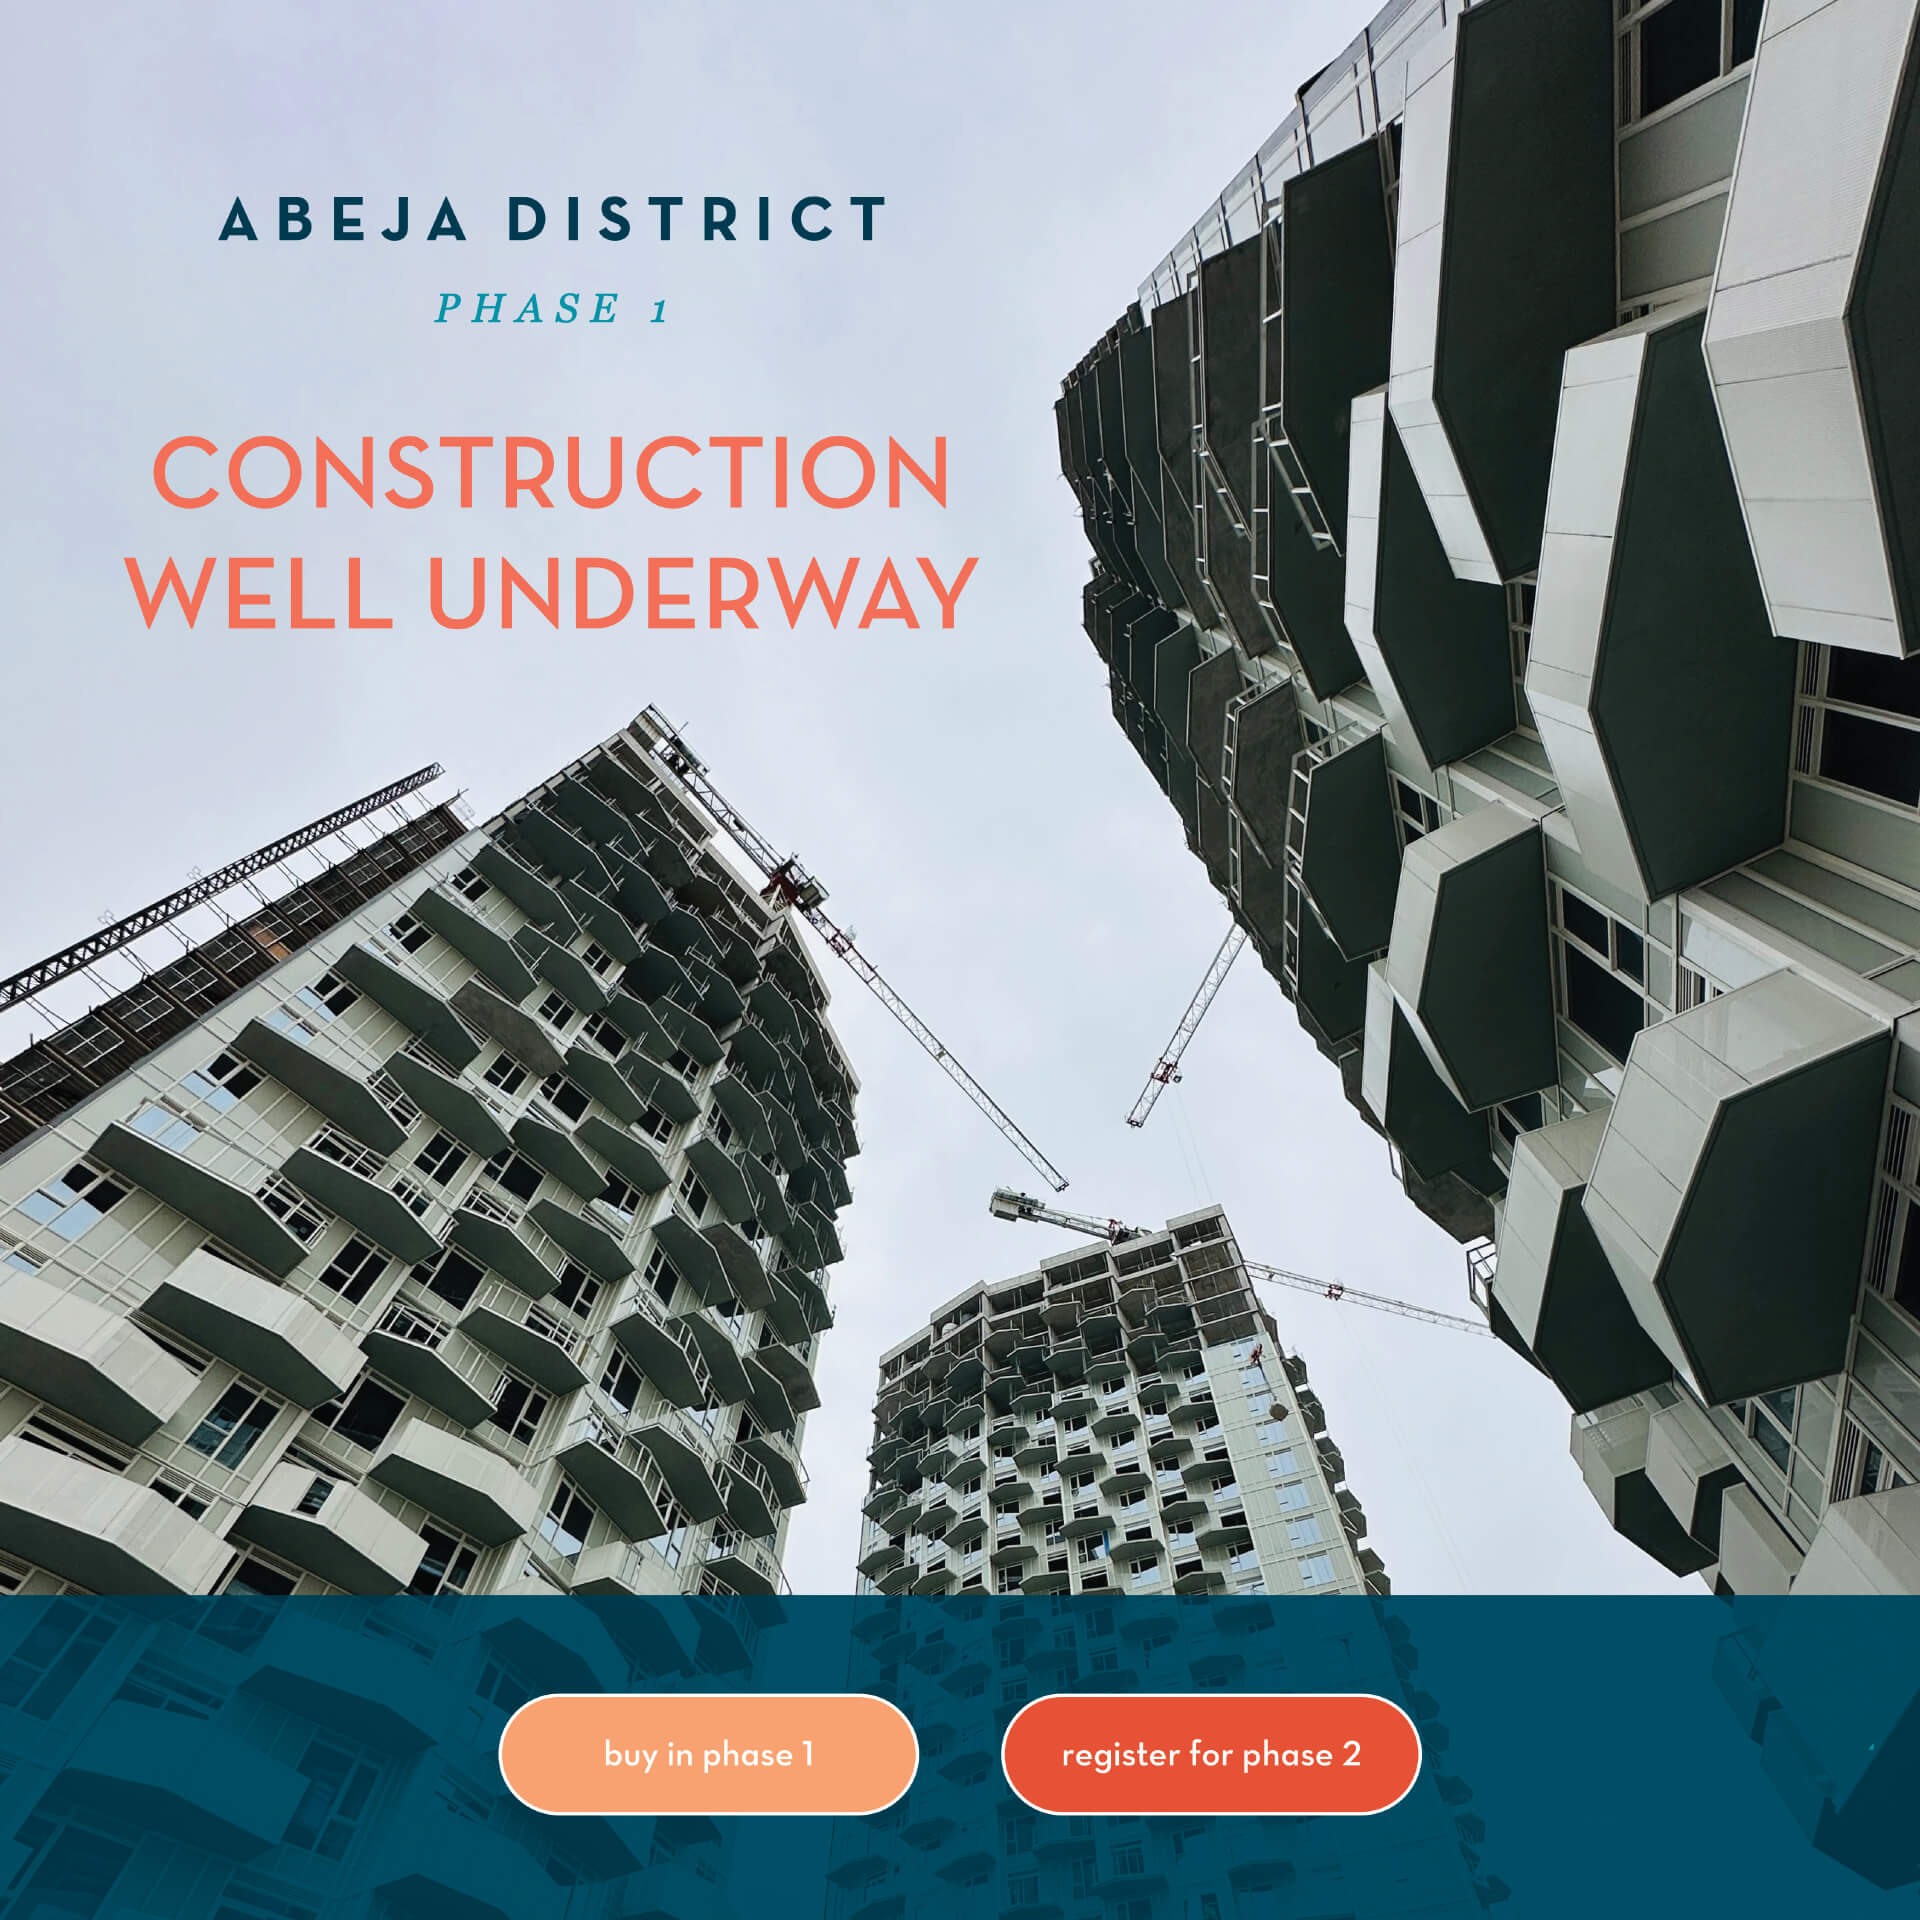 Abeja District Phase 1